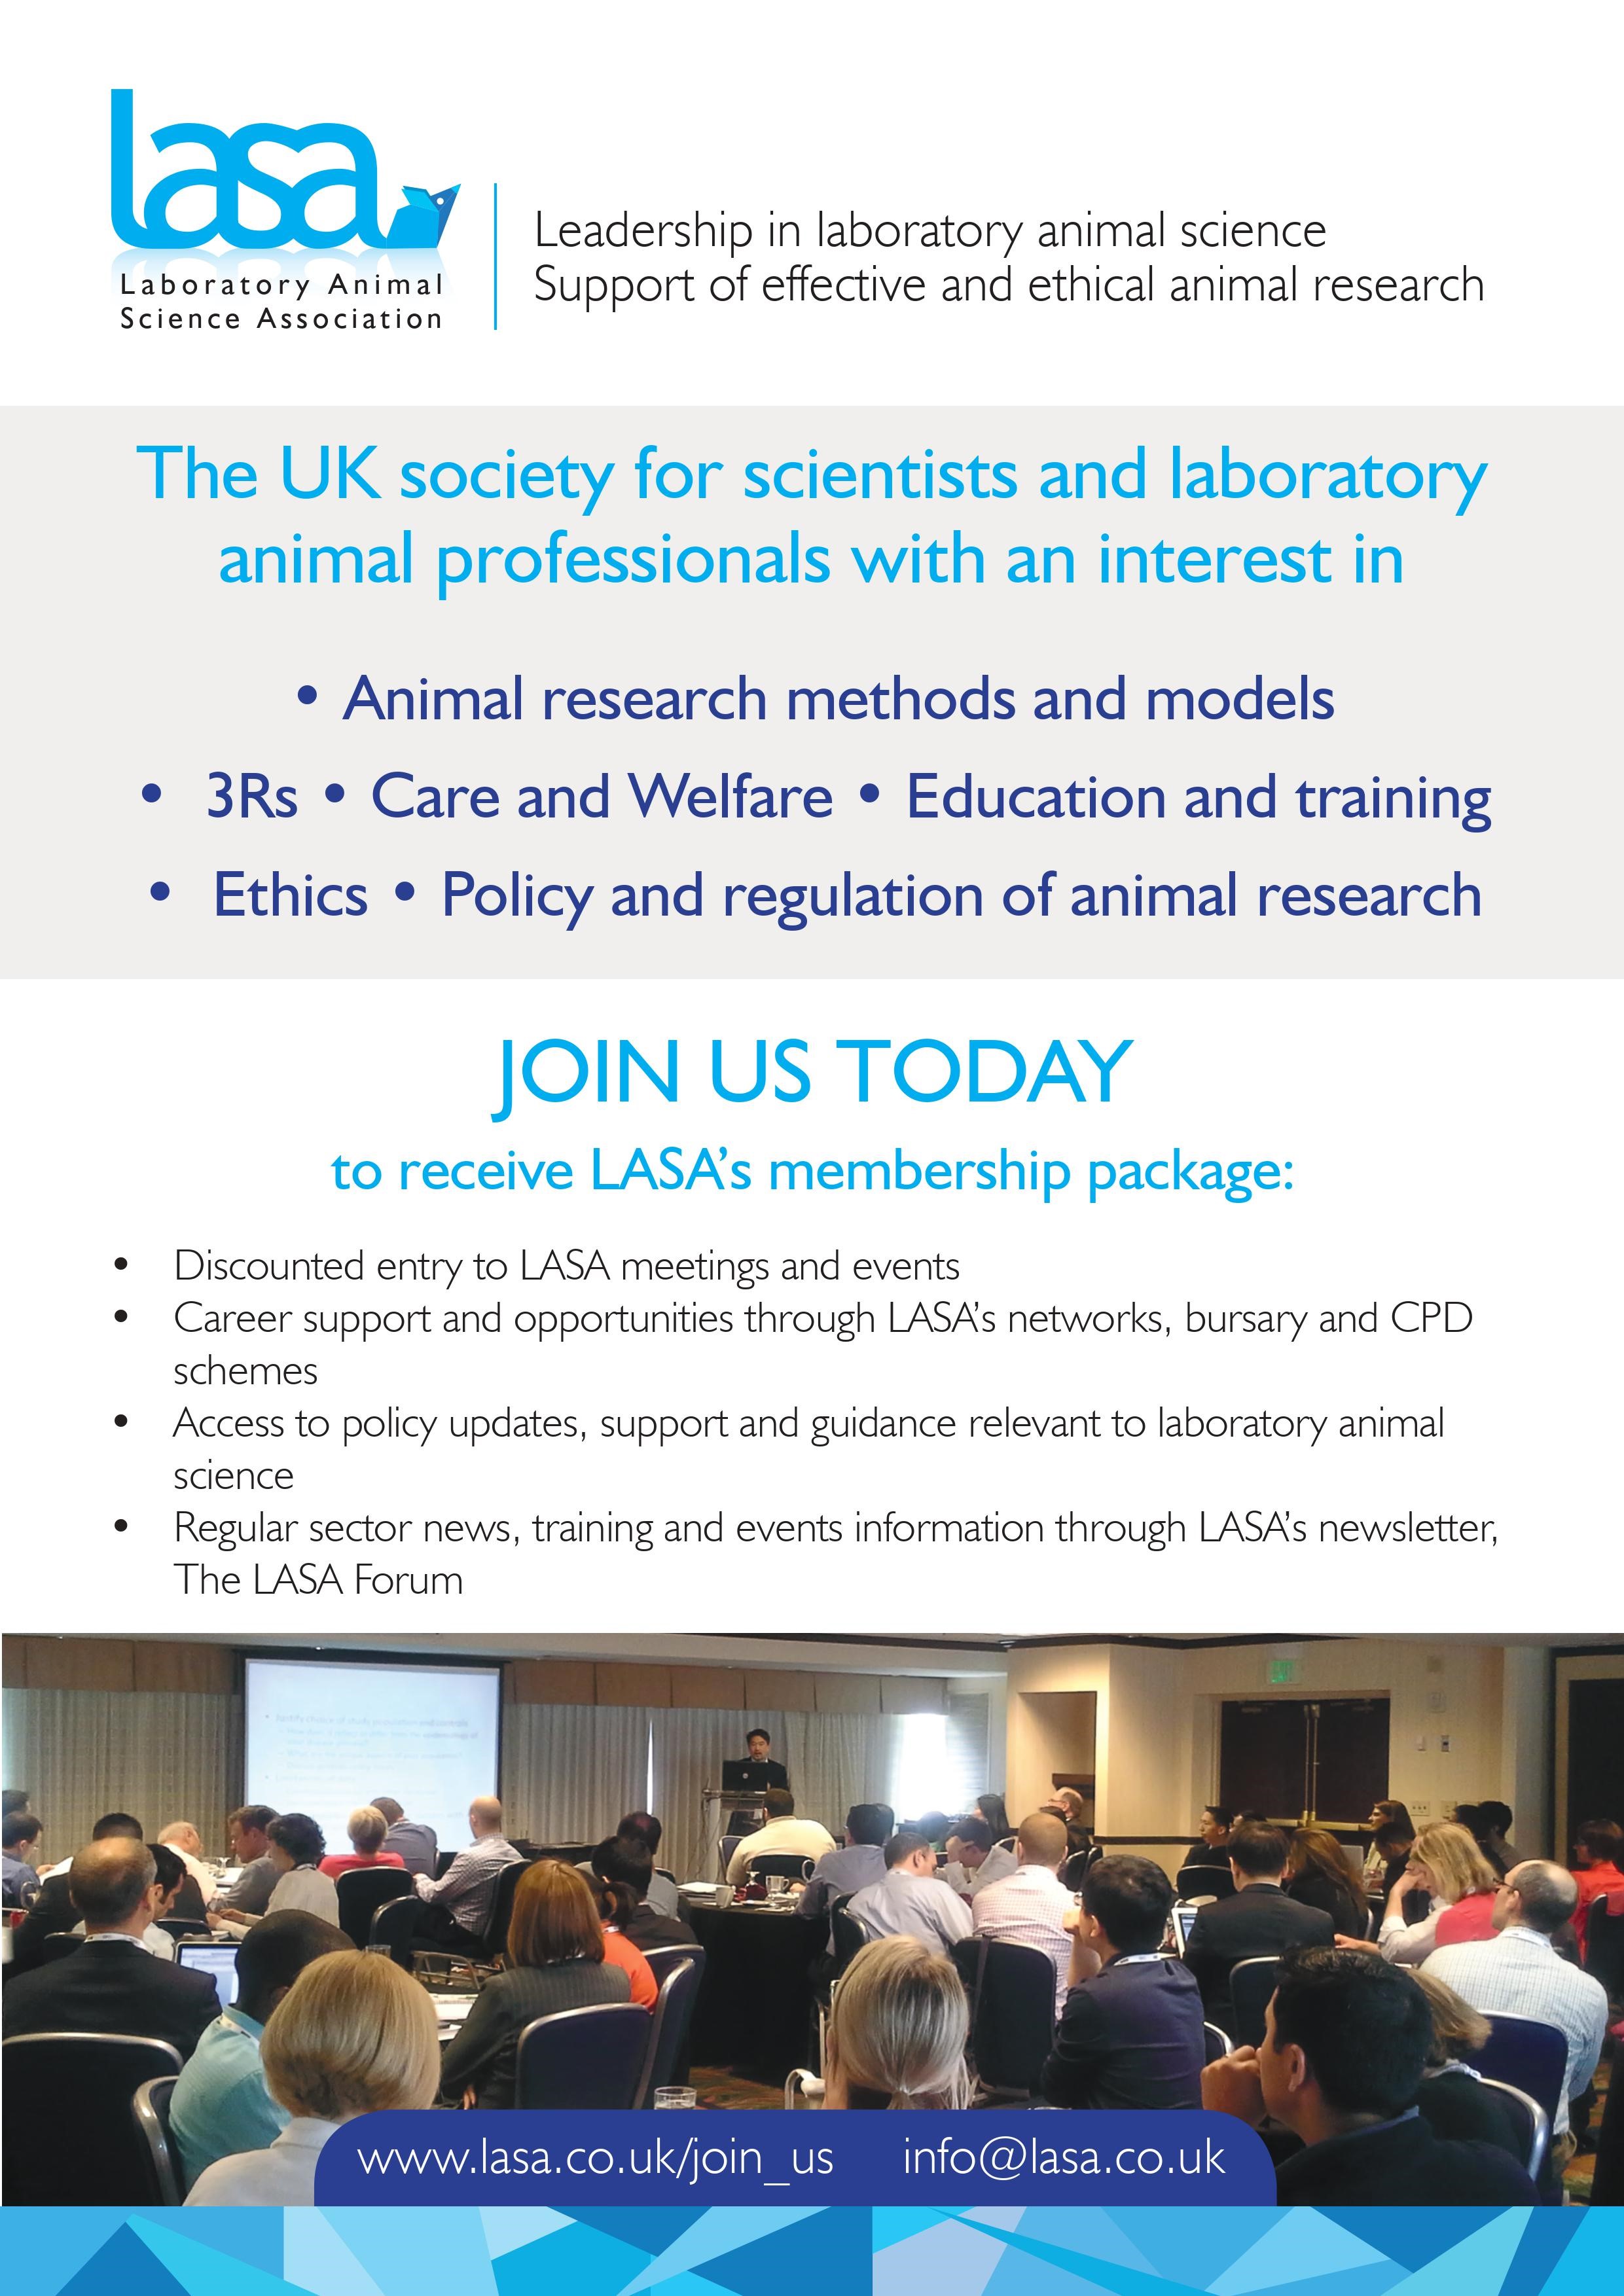 Laboratory Animal Science Association (LASA) (@LASA_UK) / Twitter